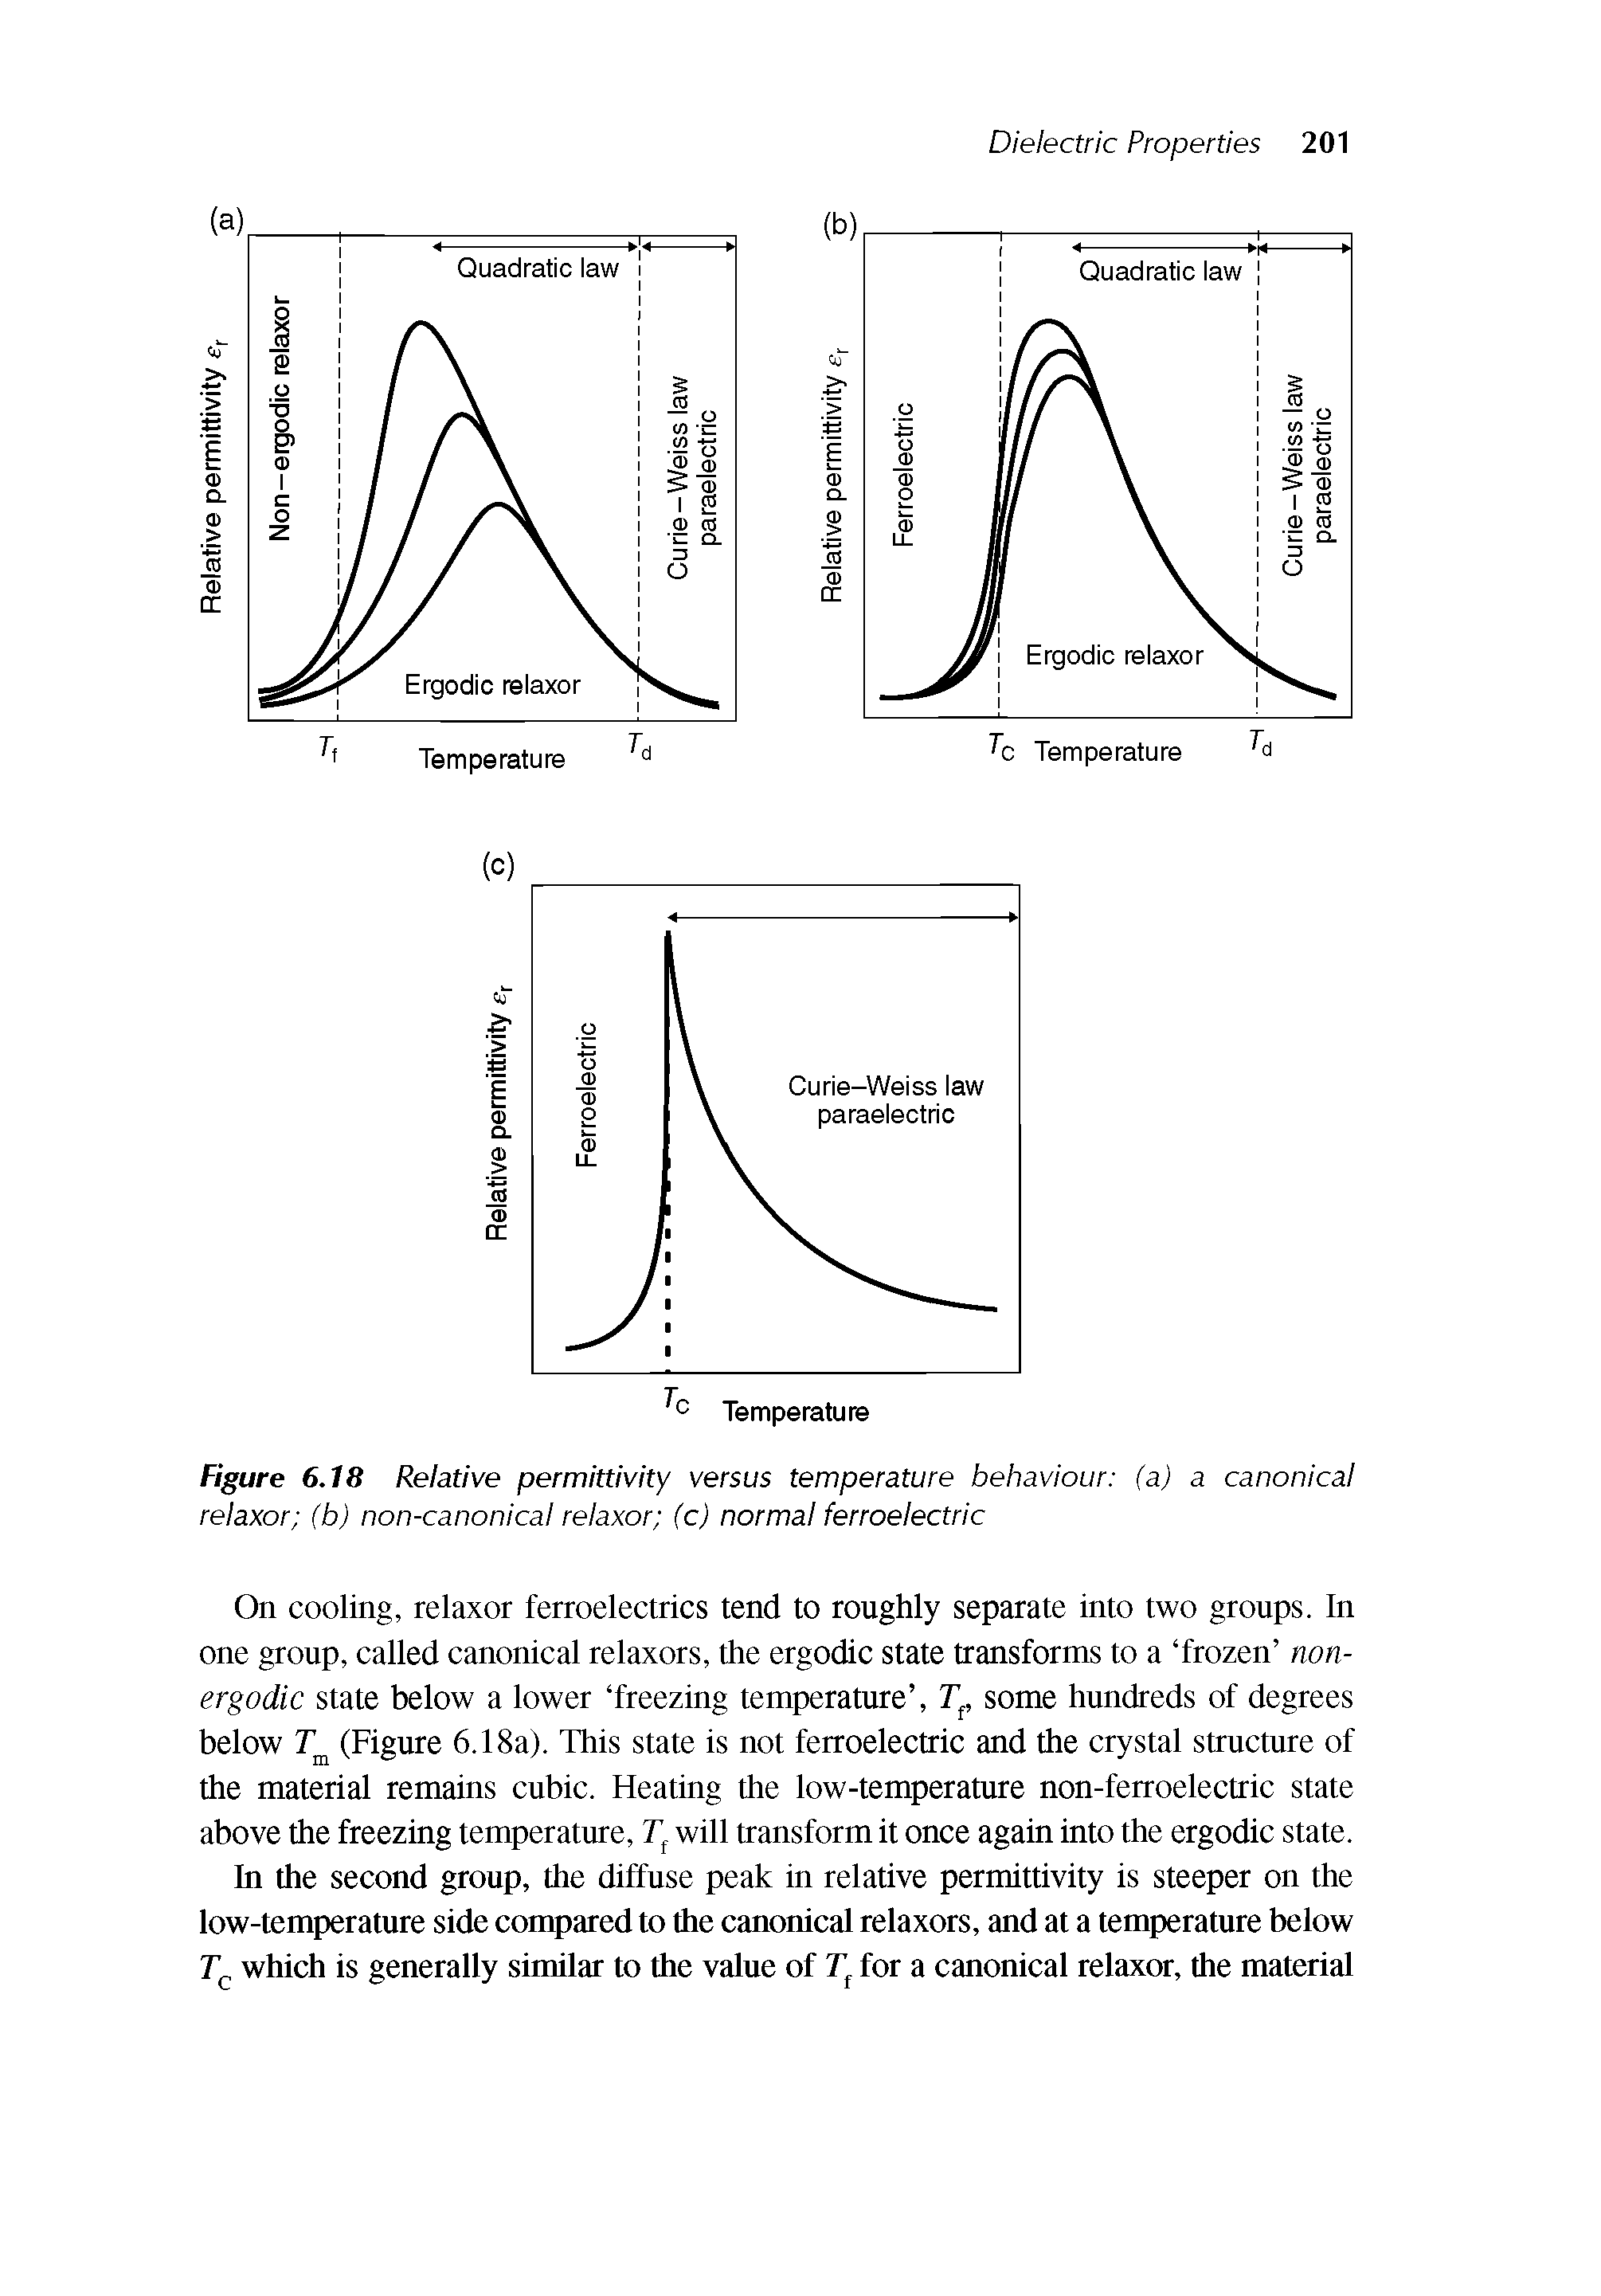 Figure 6.18 Relative permittivity versus temperature behaviour (a) a canonical relaxor (b) non-canonical relaxor (c) normal ferroelectric...